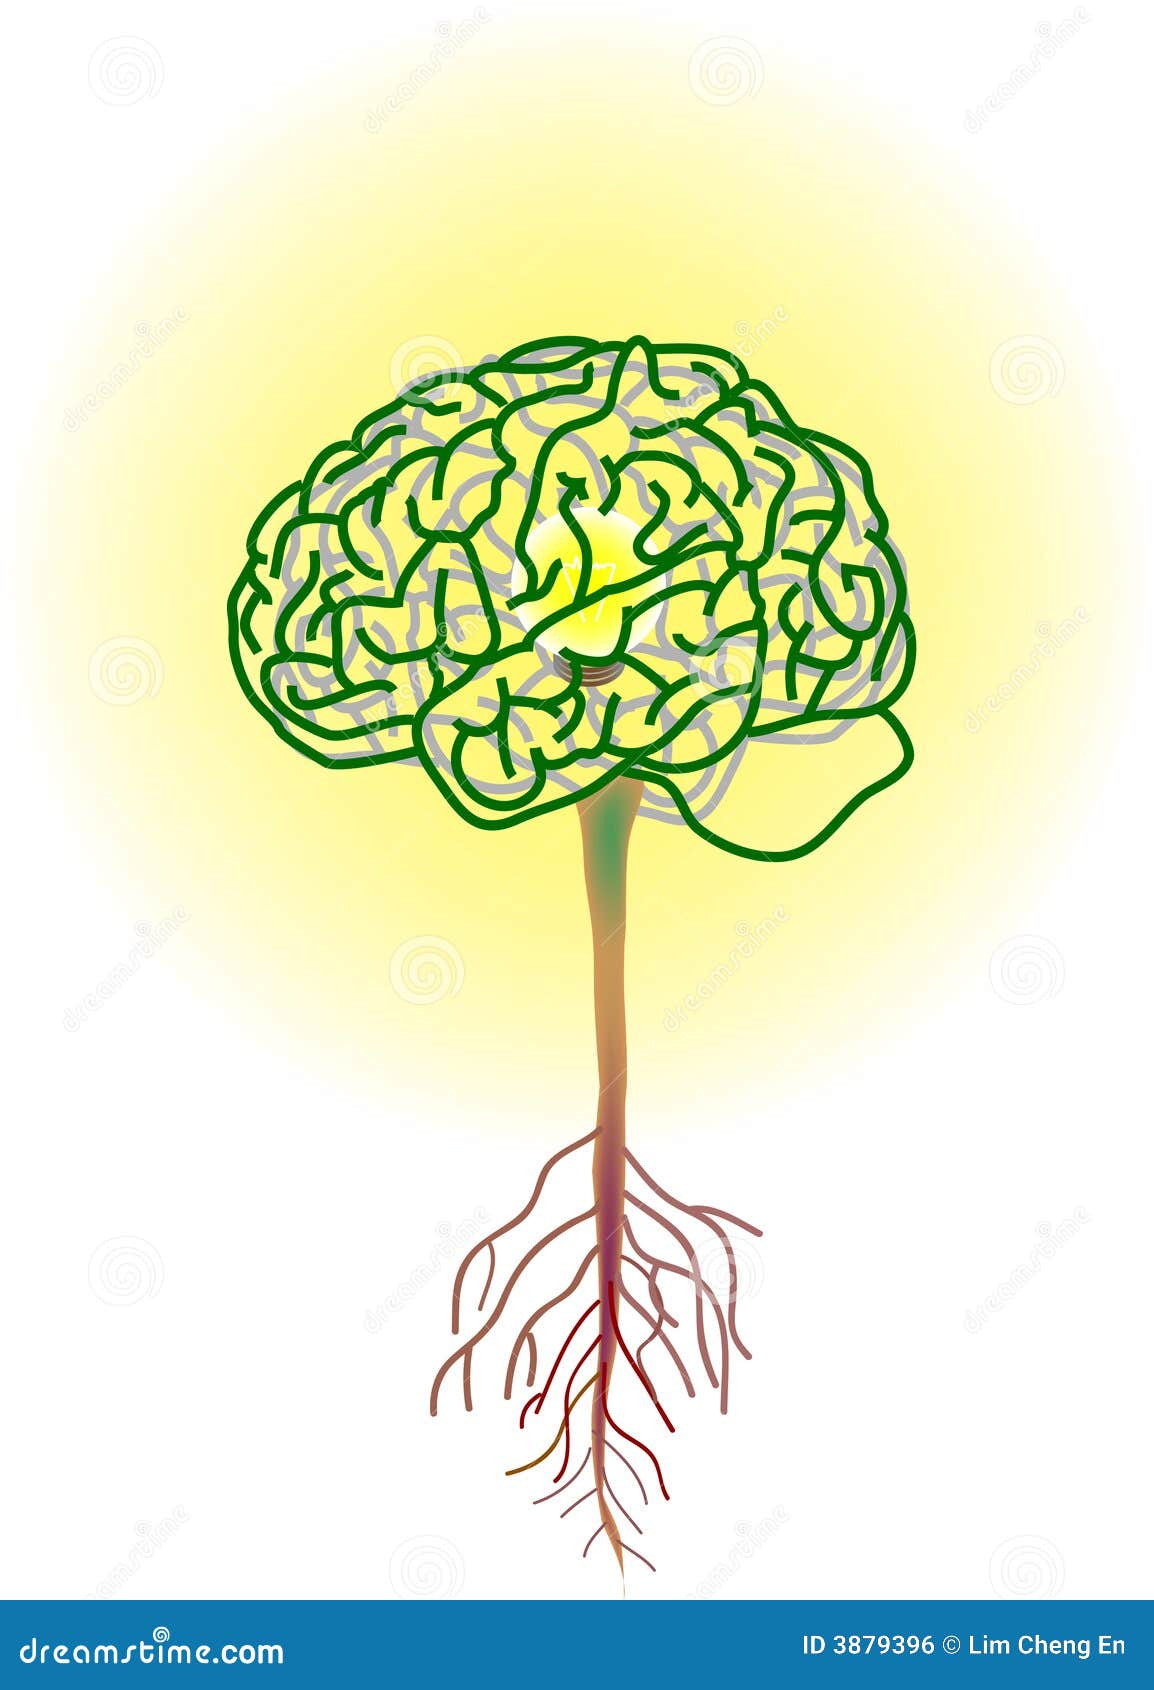 Brain Tree Royalty Free Stock Image - Image: 3879396